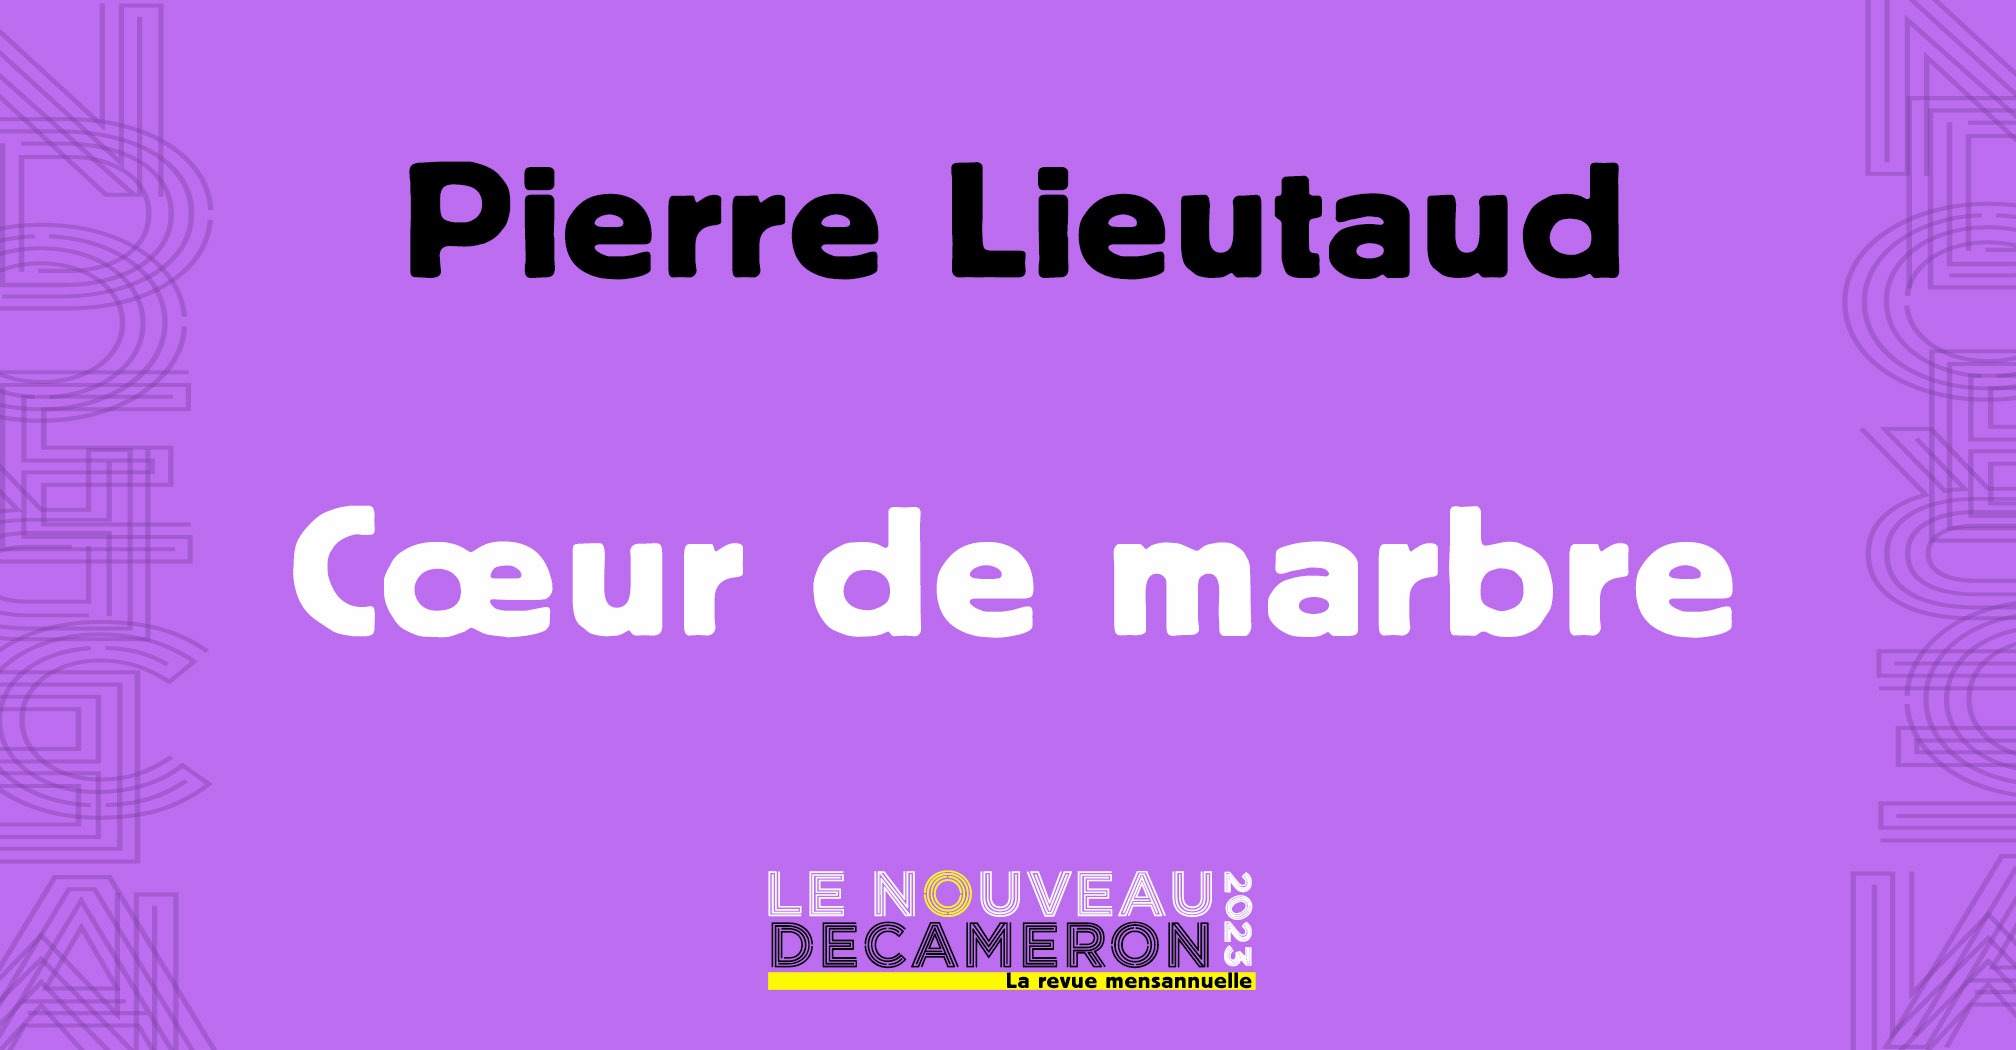 Pierre Lieutaud - Cœur de marbre